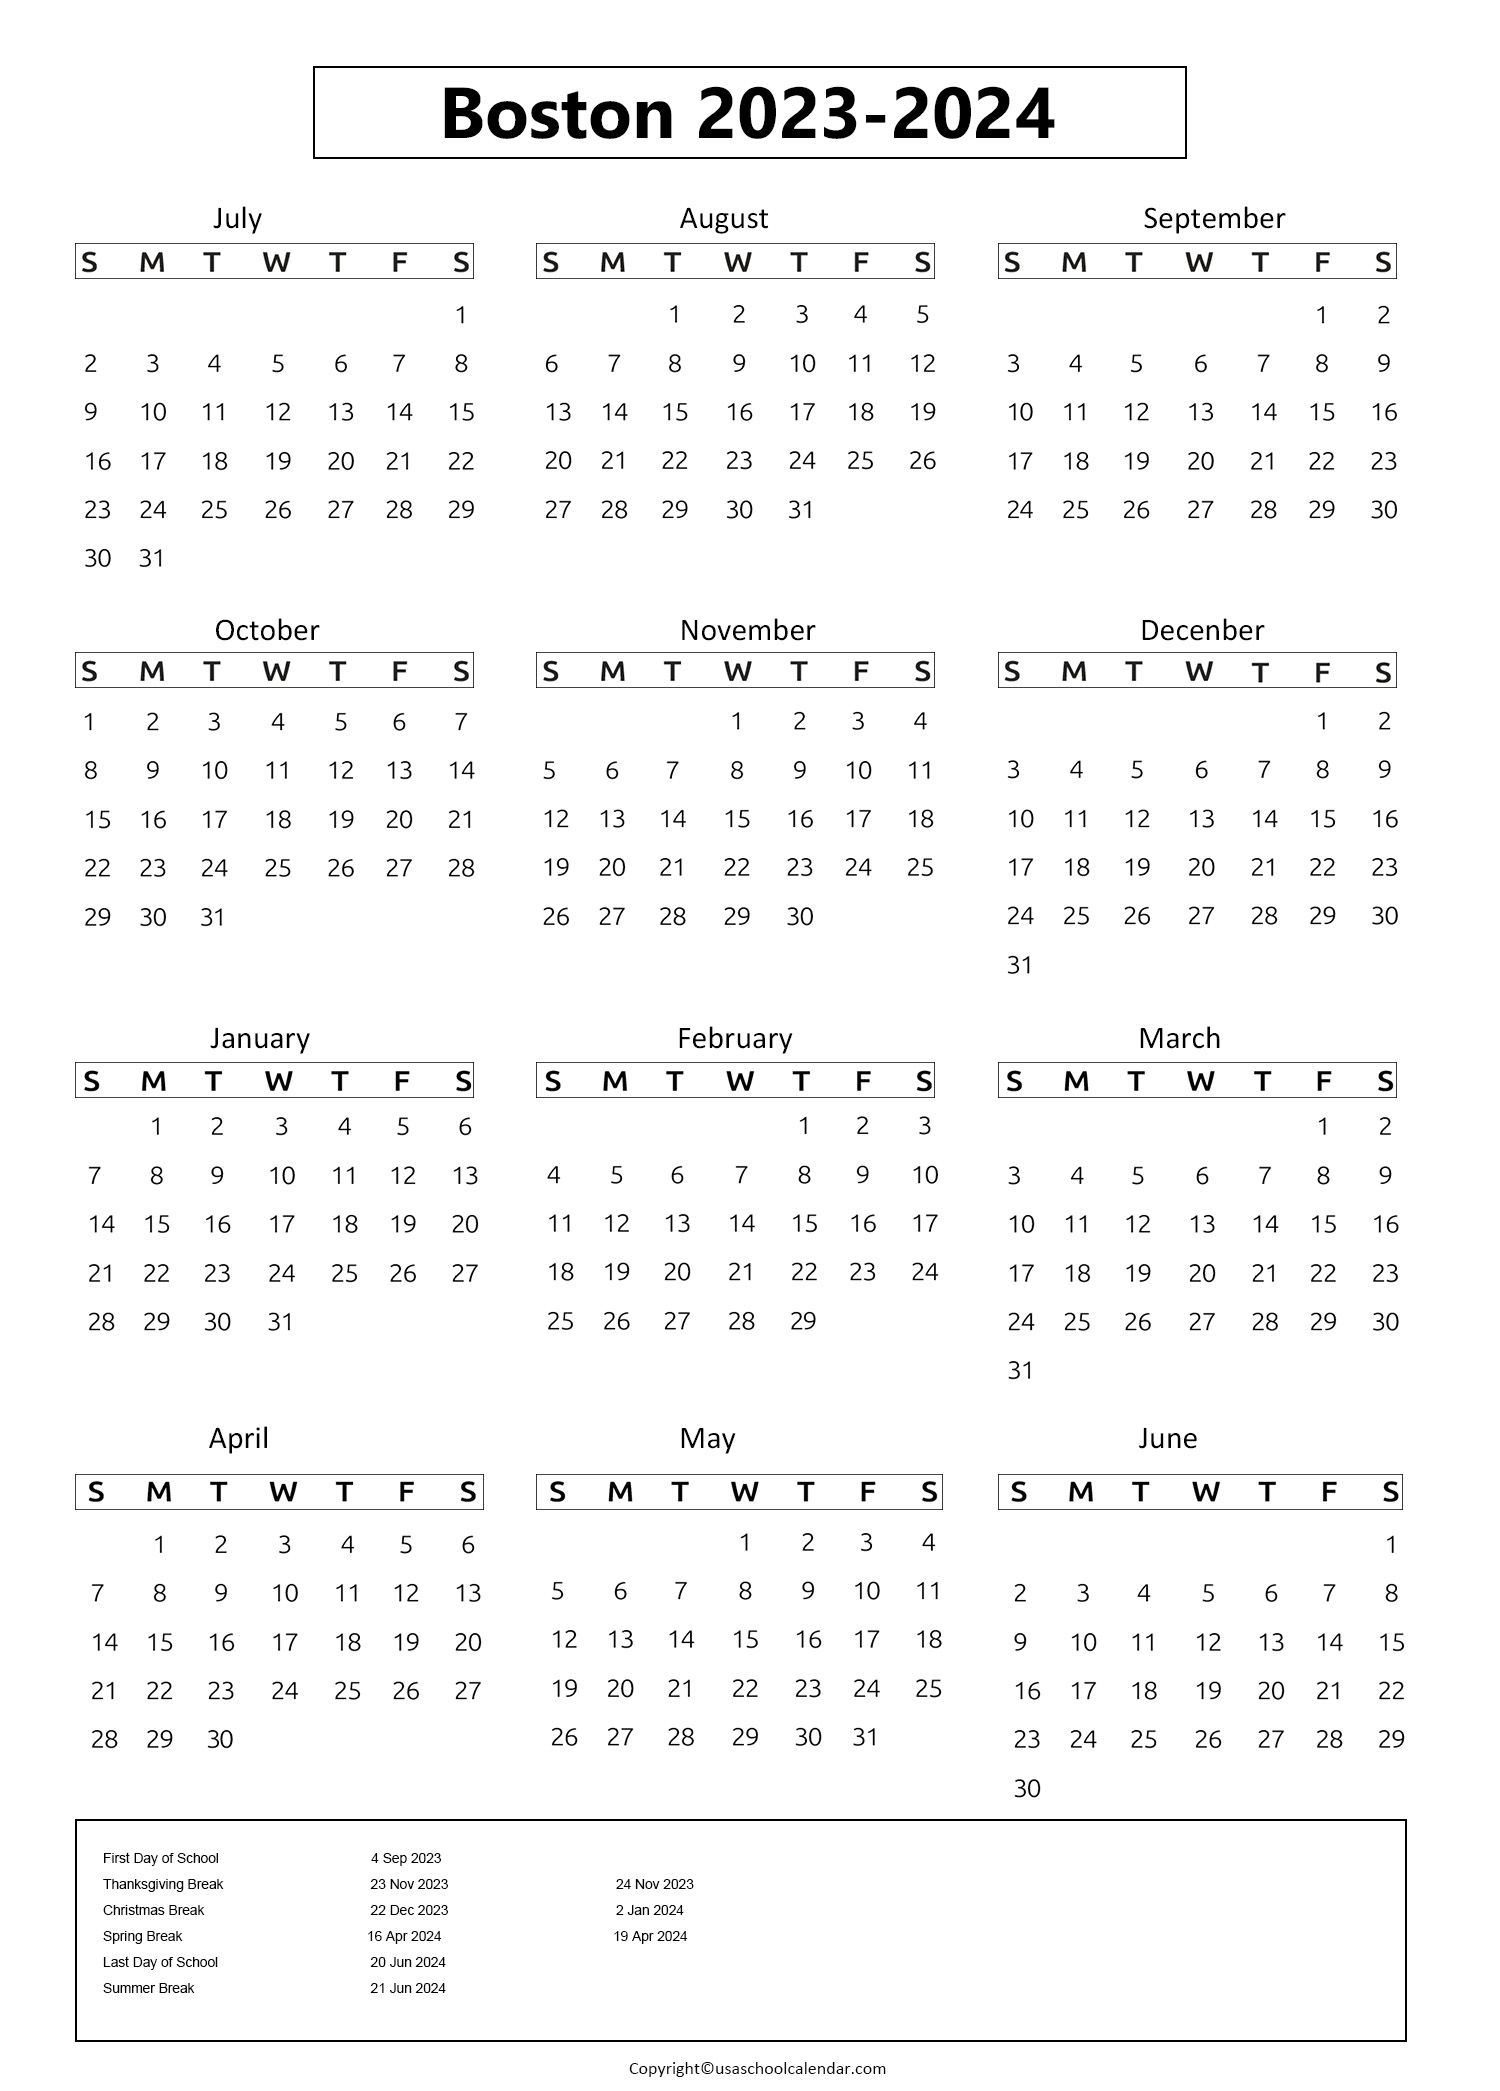 Boston Public Schools Calendar & Holidays 20232024